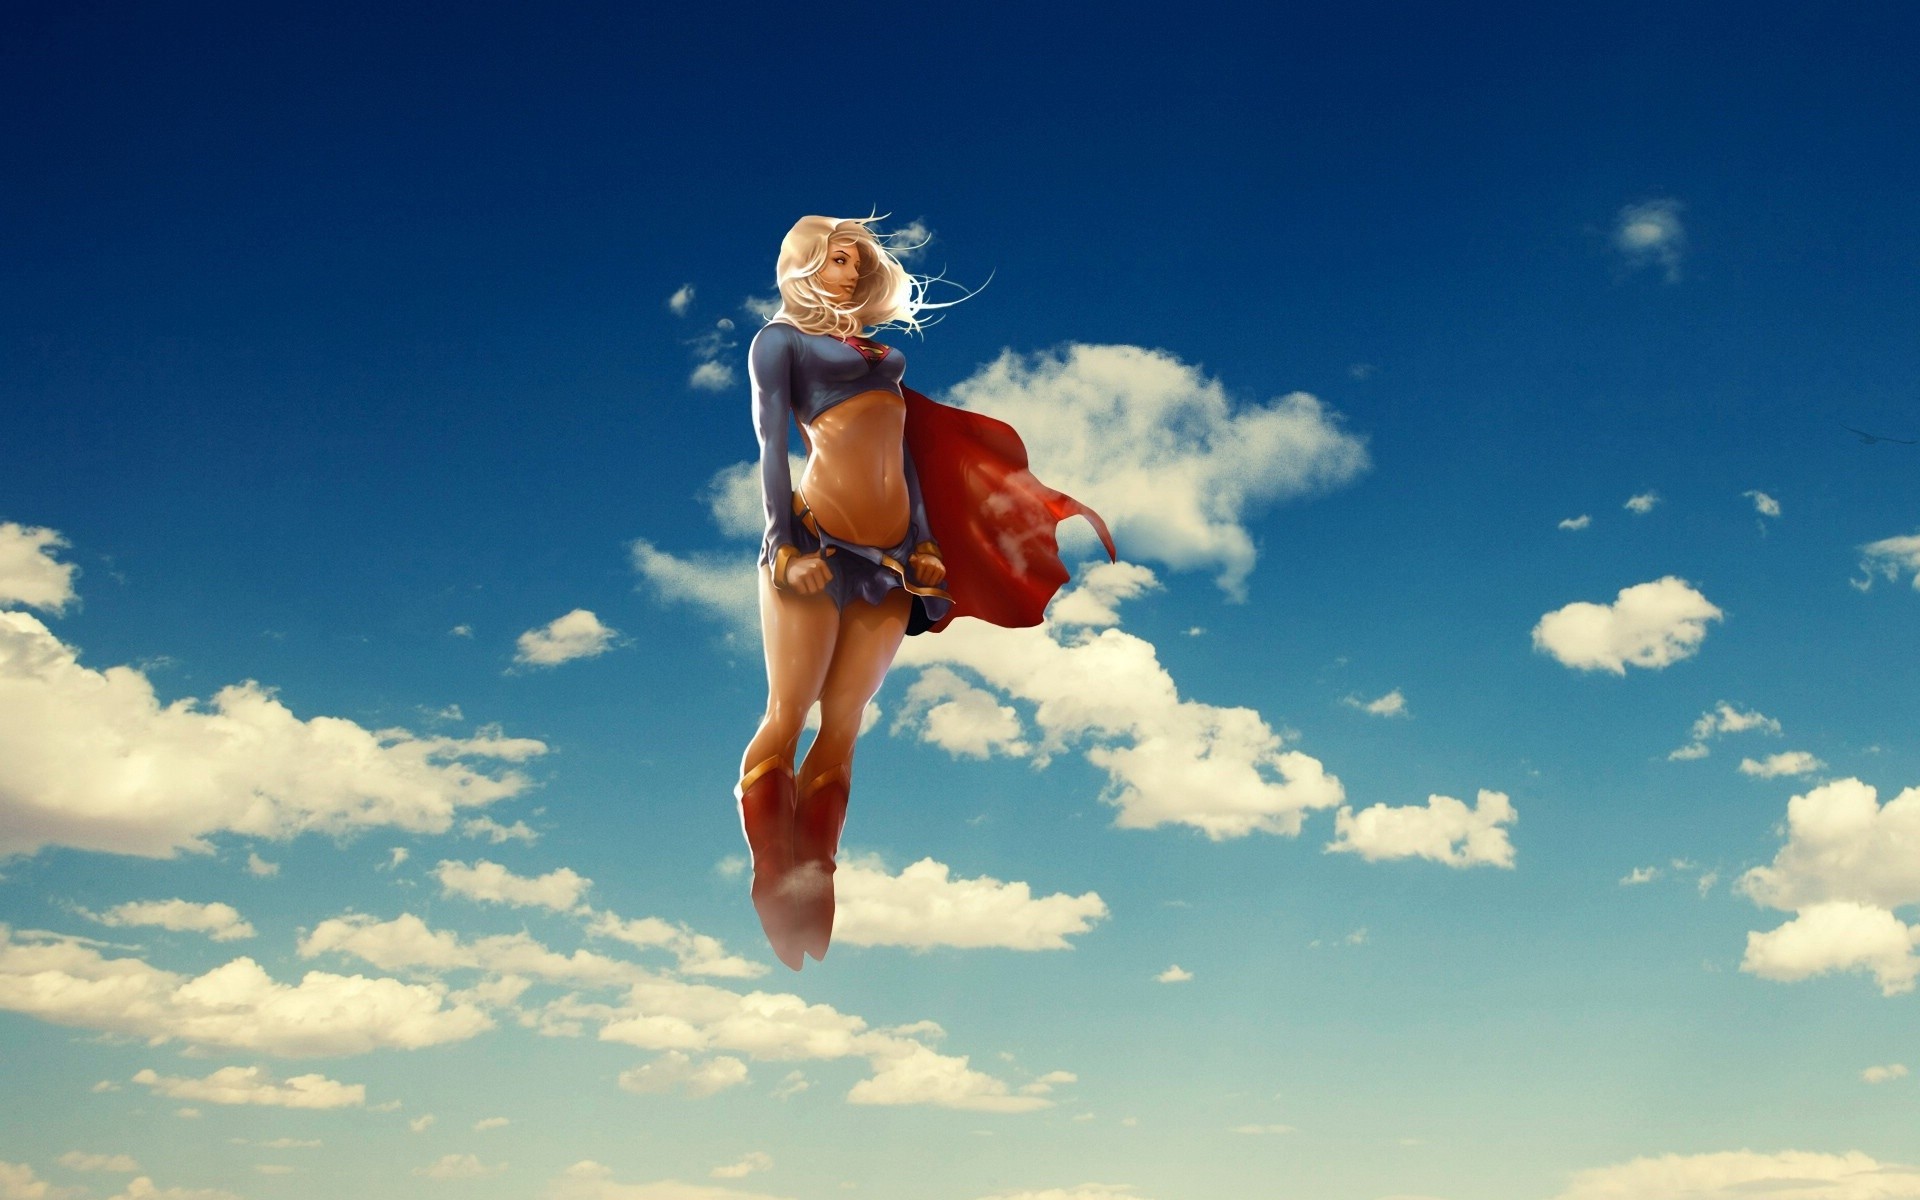 General 1920x1200 Supergirl sky clouds flying blonde superhero artwork DC Comics superheroines cape digital art fantasy girl belly